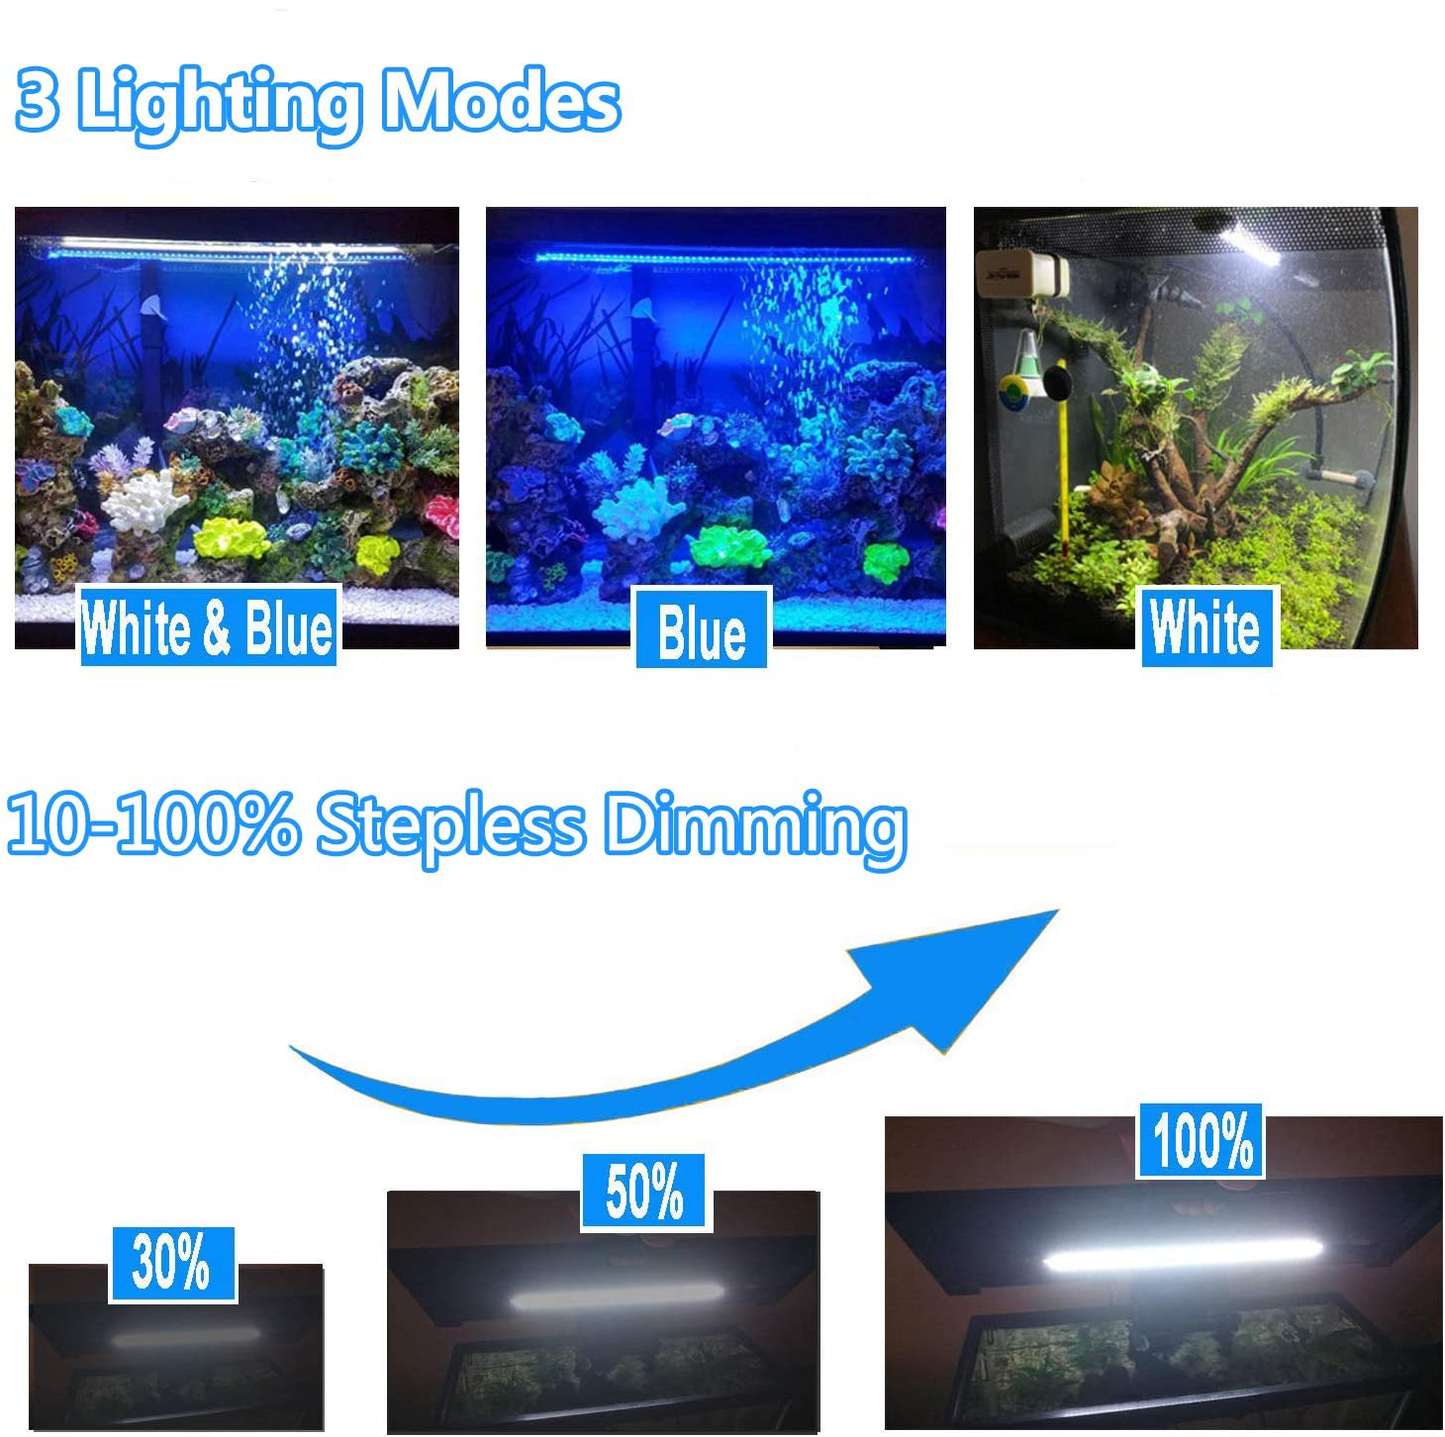 Mingdak Submersible LED Aquarium Light,Fish Tank Light with Timer Auto On/Off, White & Blue LED Light Bar Stick for Fish Tank, 3 Light Modes Dimmable,8W,15 Inch